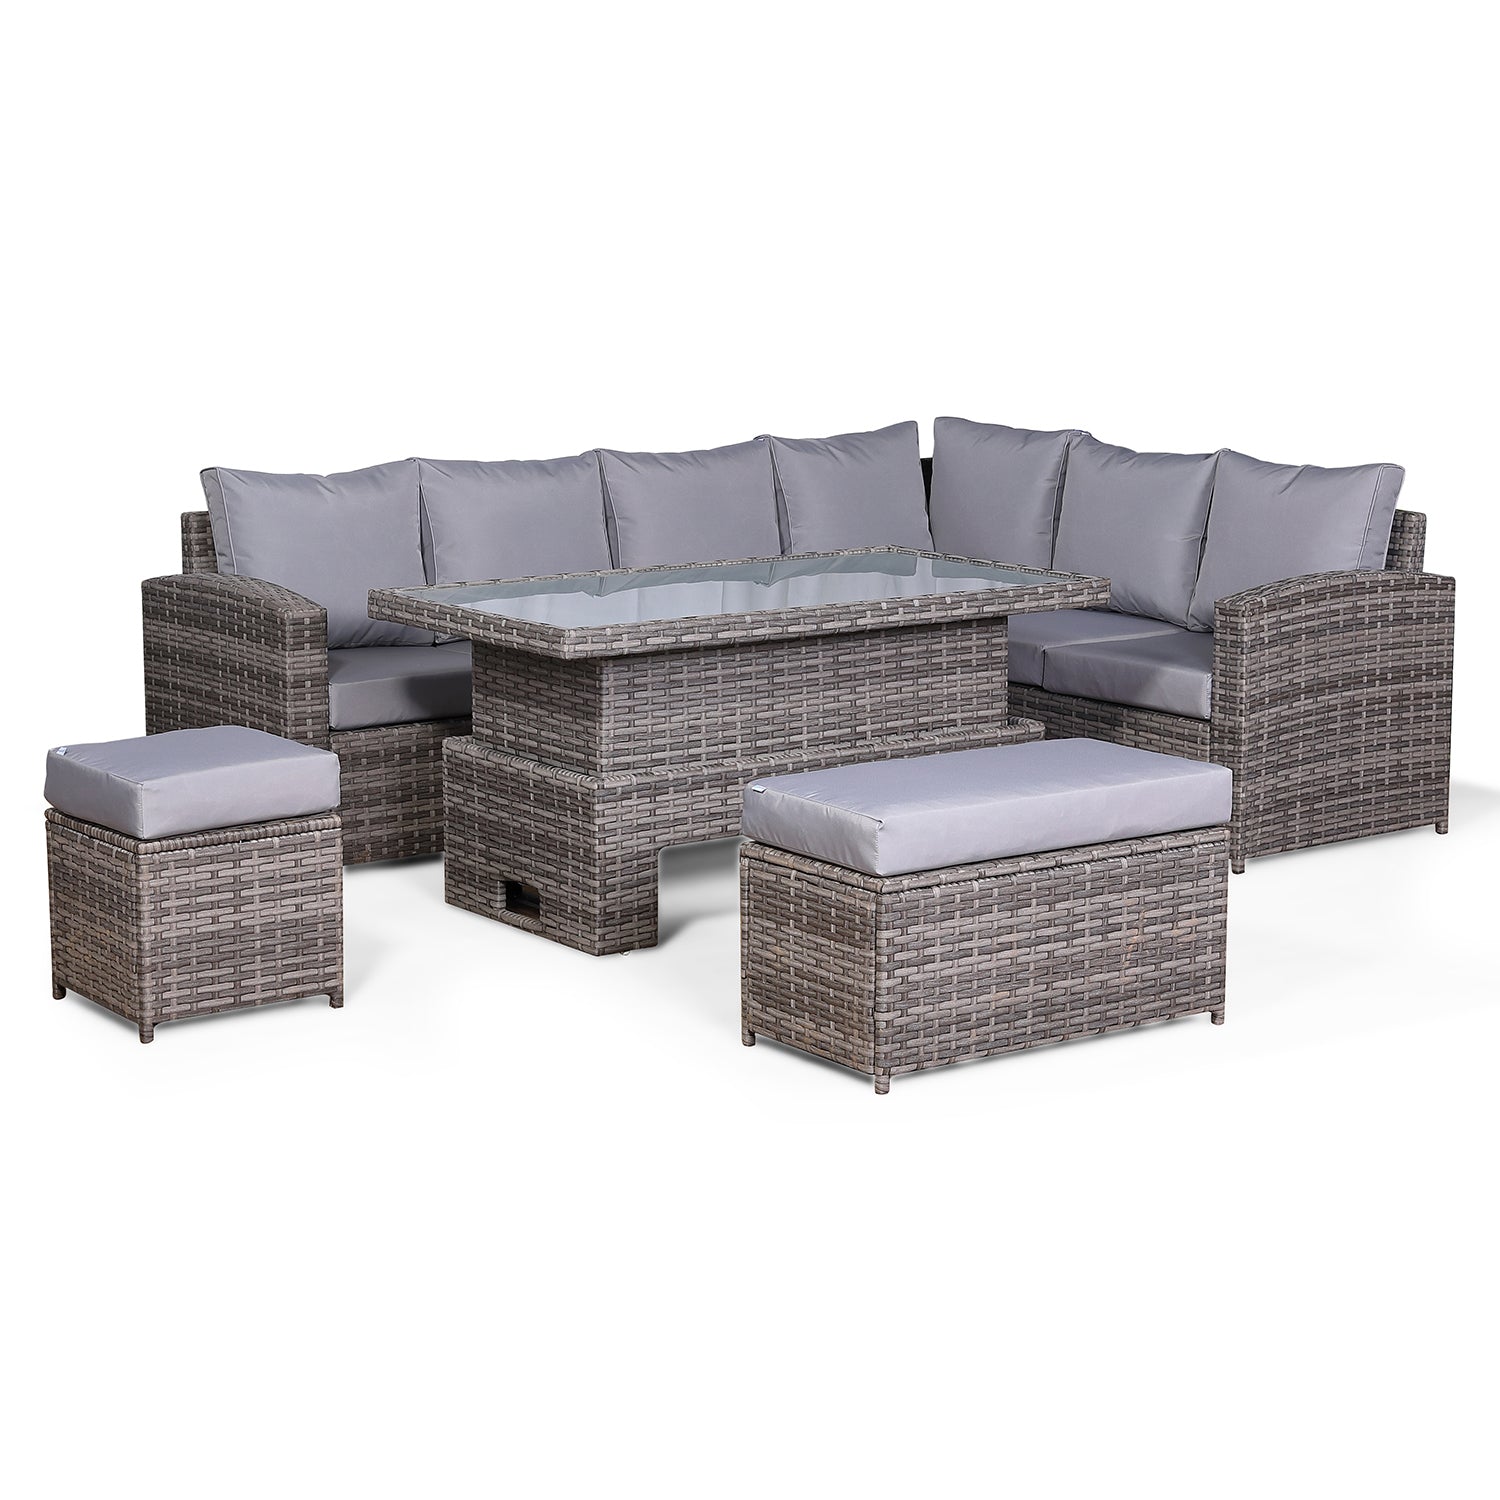 Bali Range RHF Corner Sofa with Rising Table in Grey Weave(CR25)